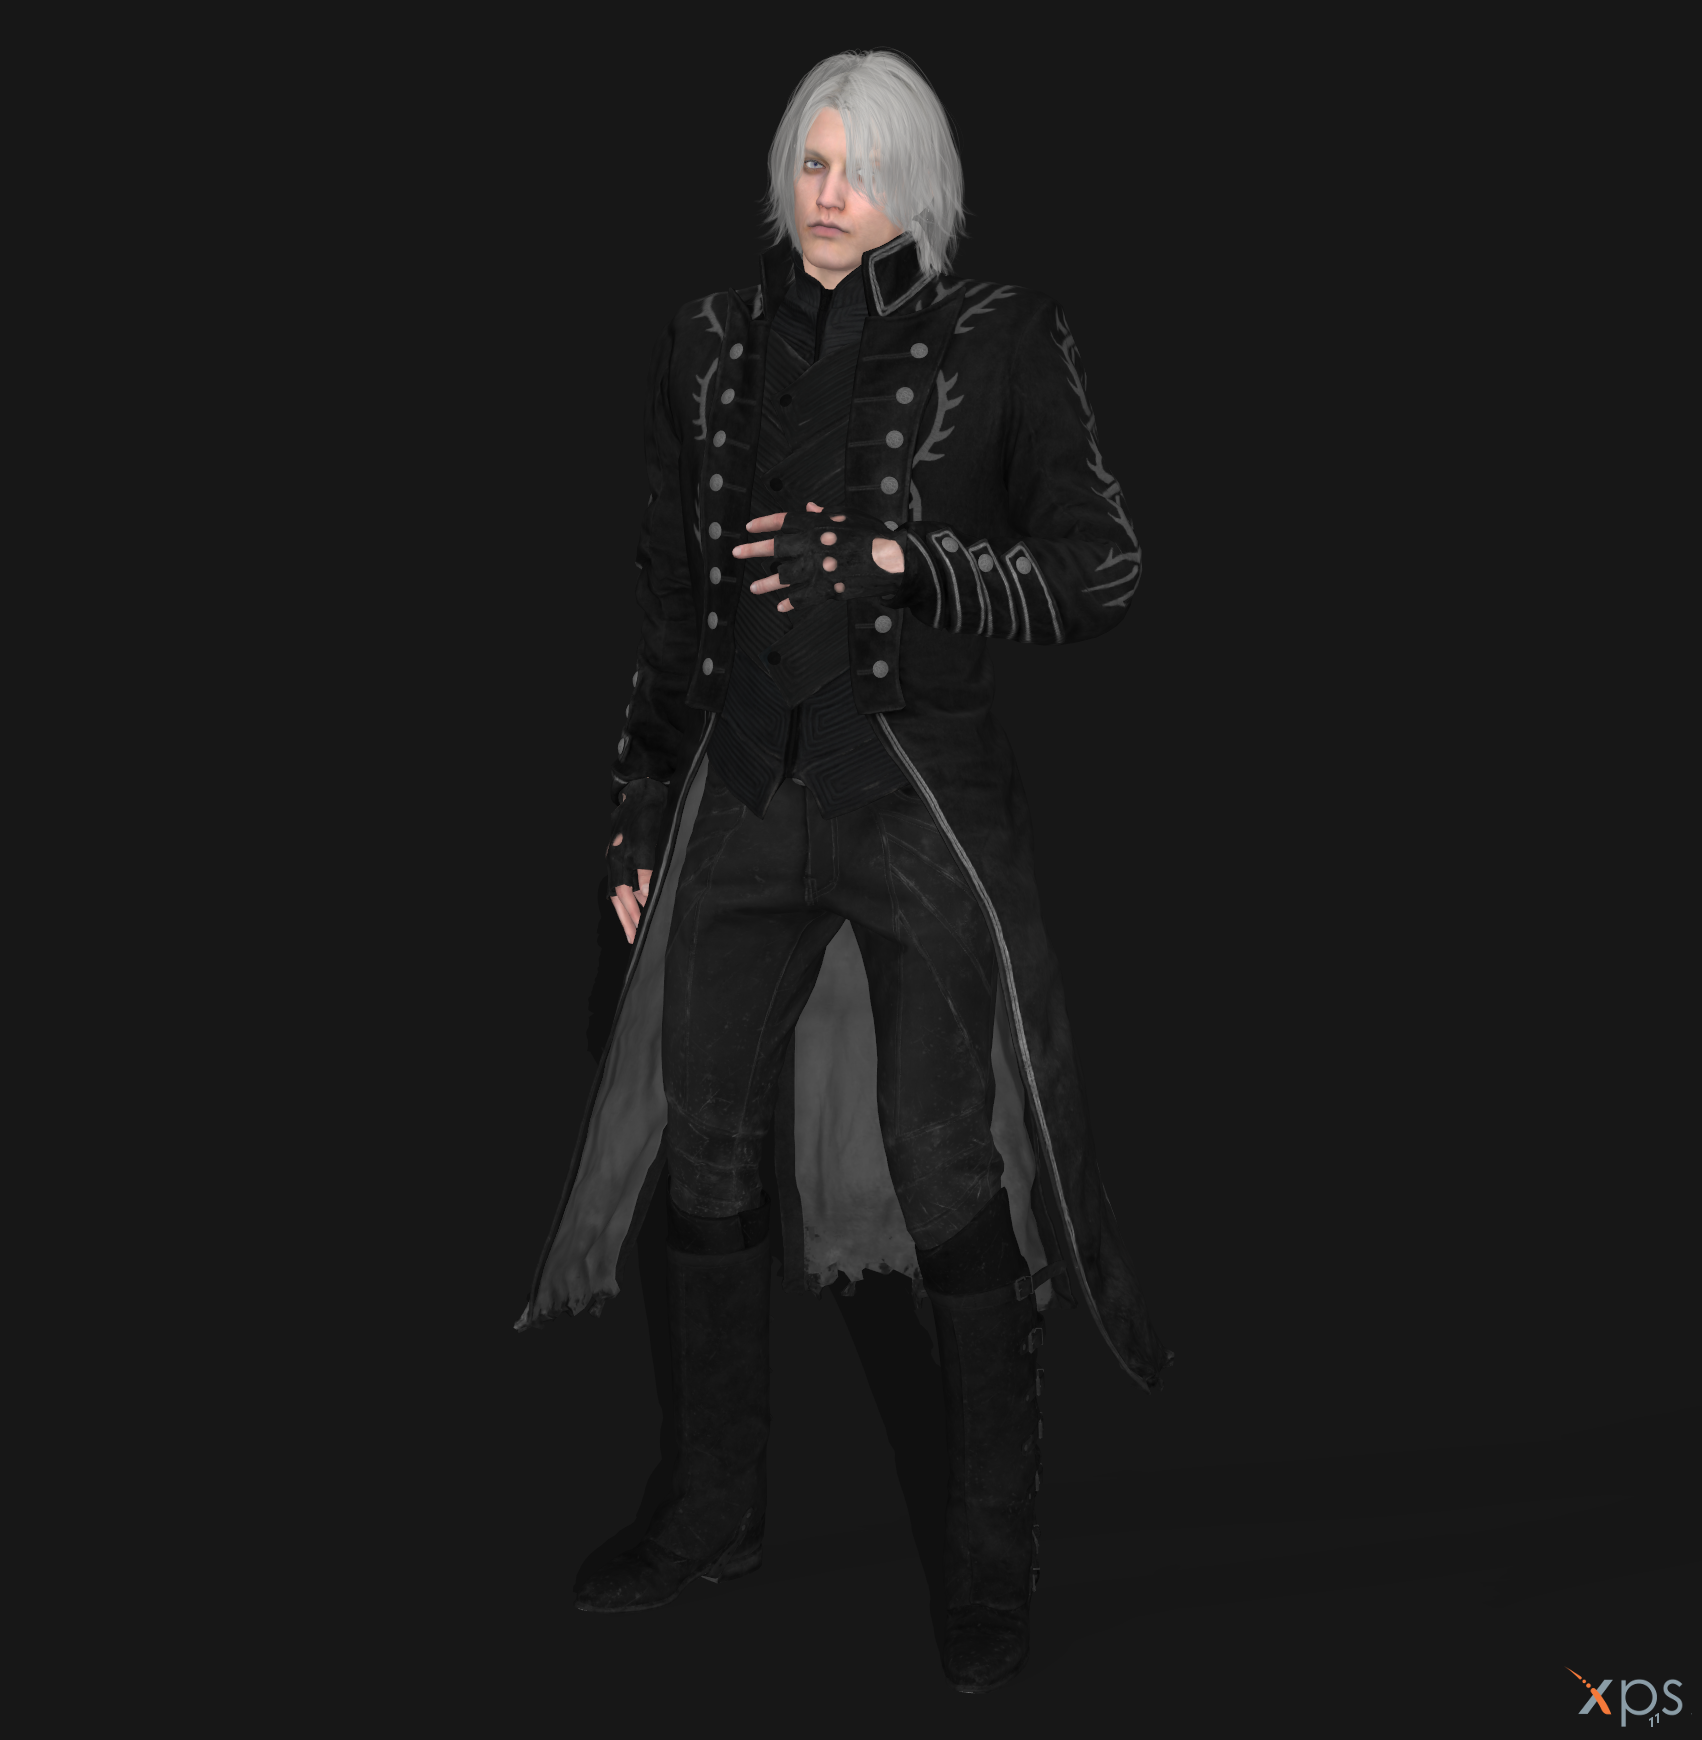 Dante(DMC2) cutscene model by Moccacino-chan on DeviantArt